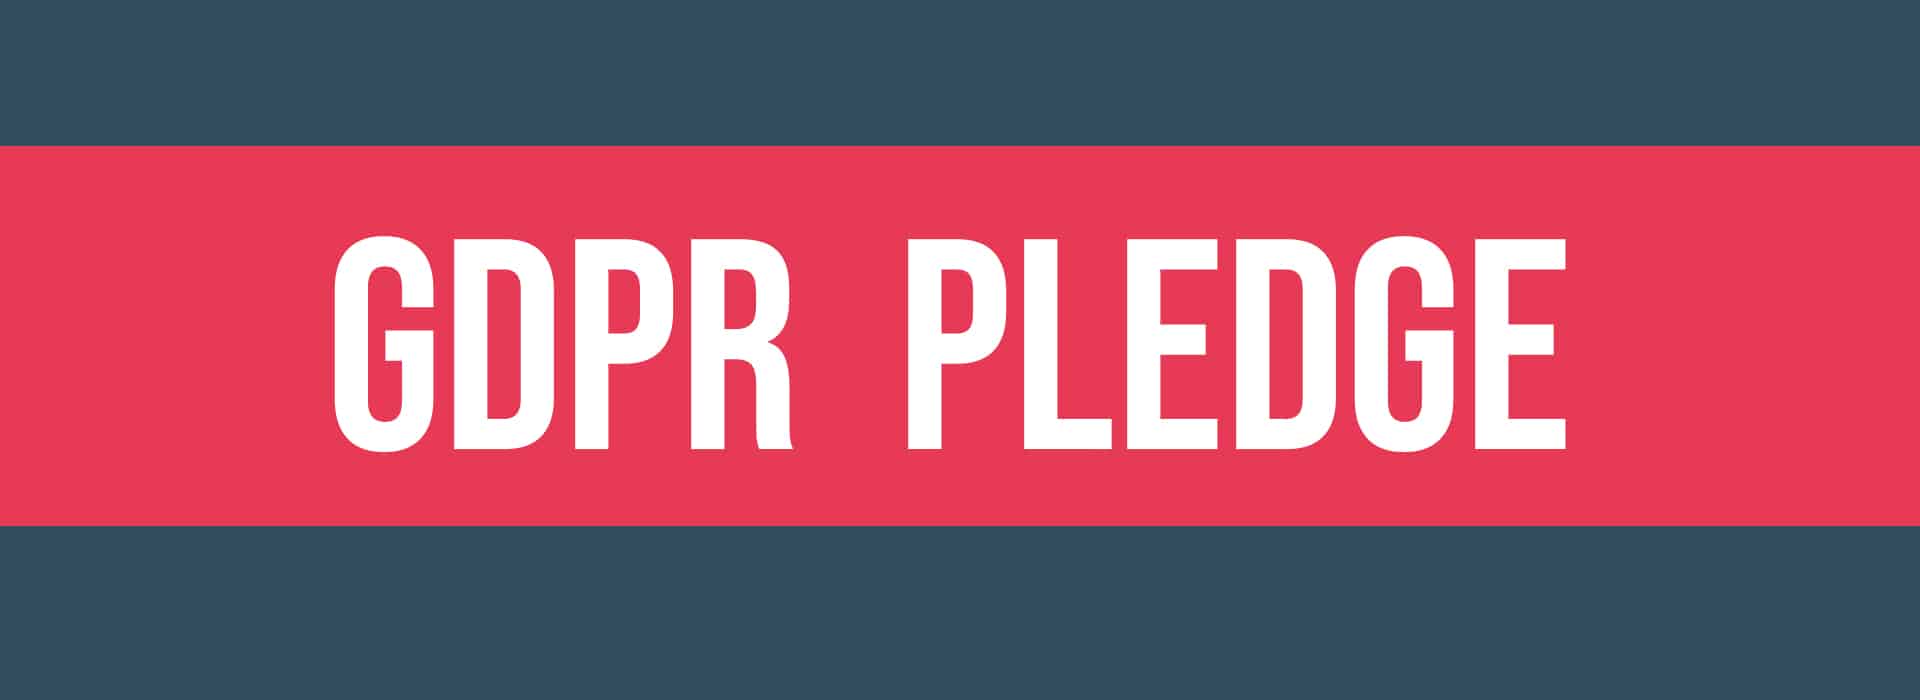 GDPR Pledge graphic